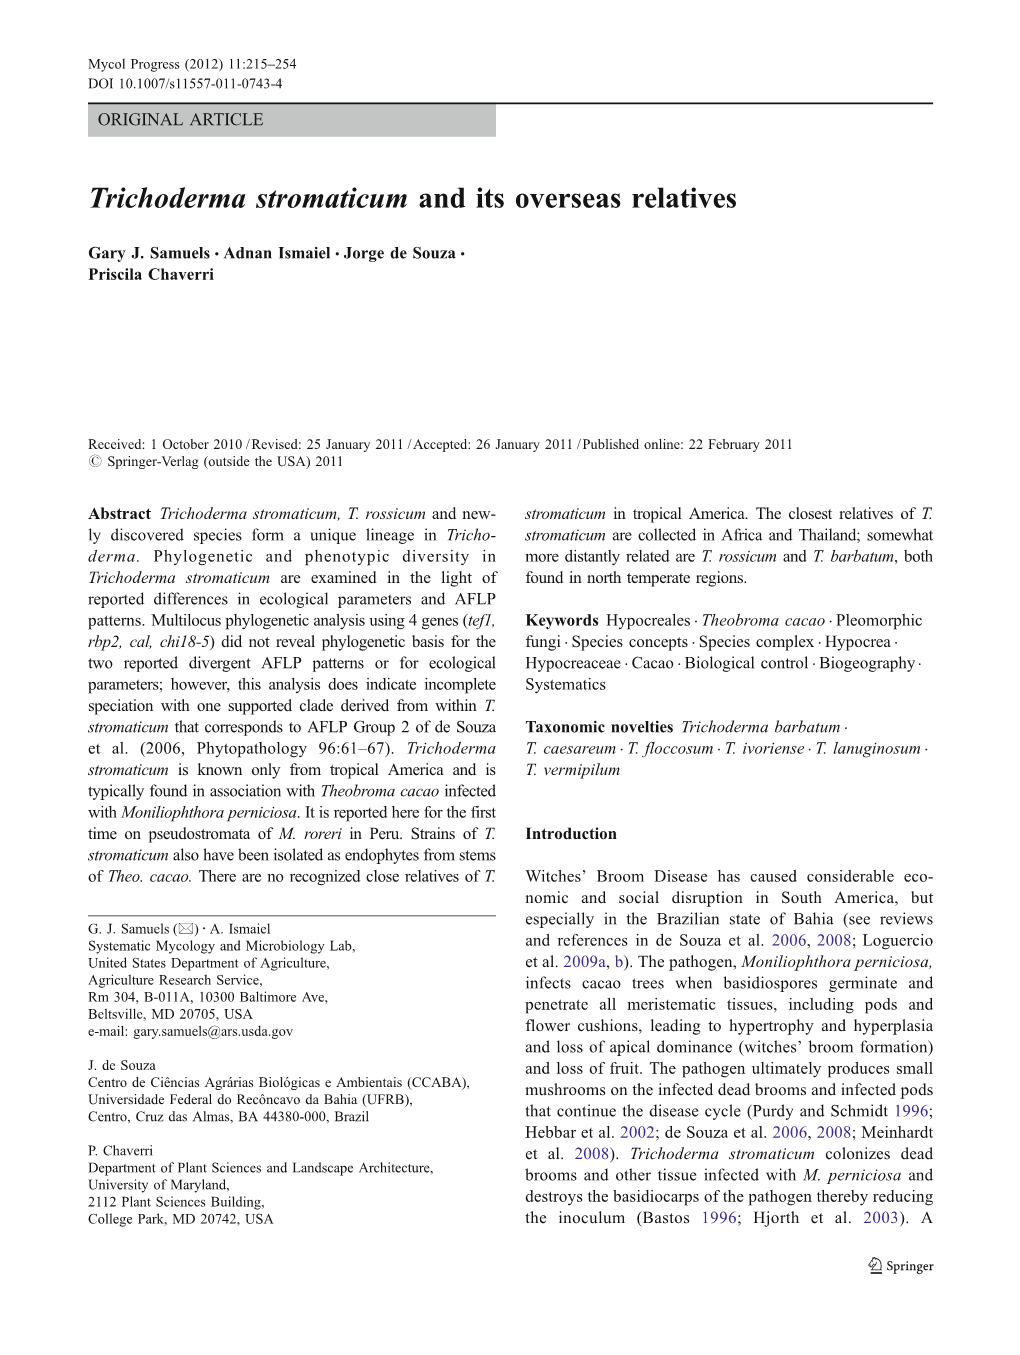 Trichoderma Stromaticum and Its Overseas Relatives